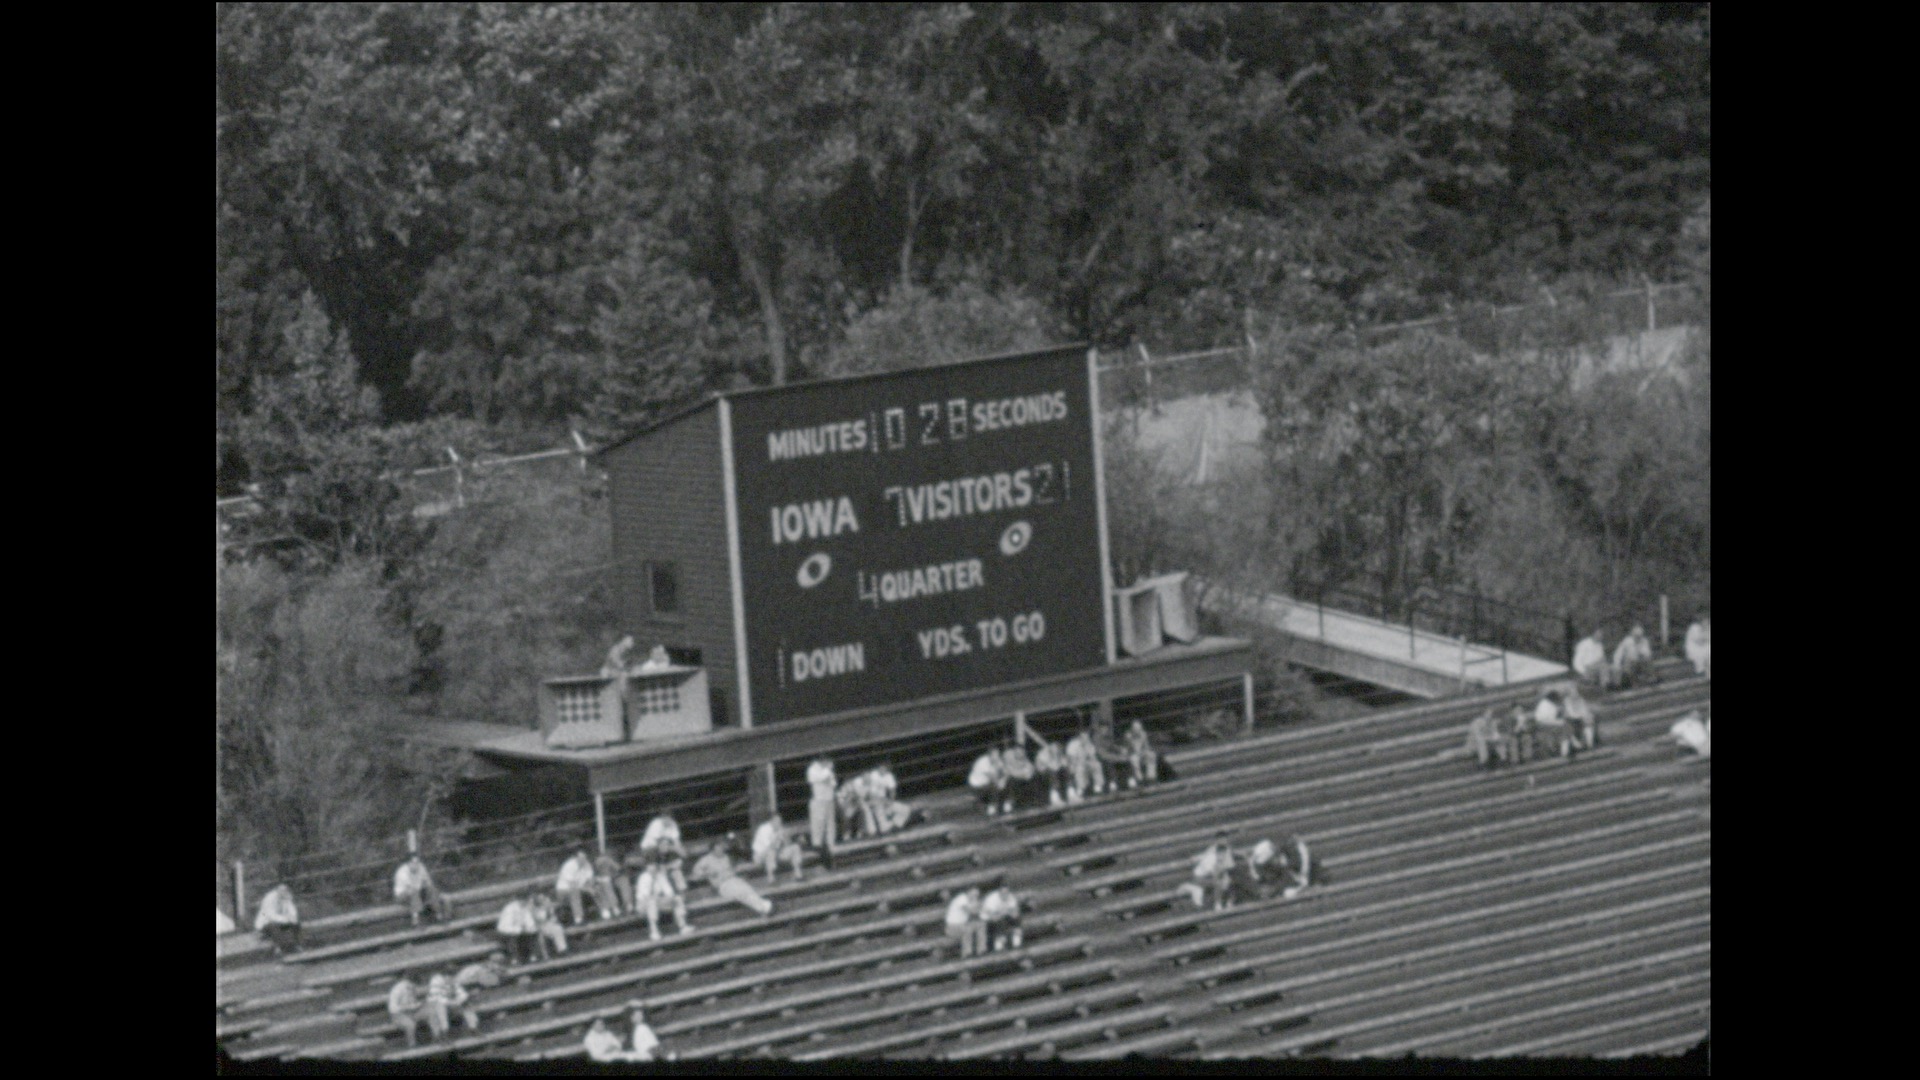 MSC Football vs. Iowa, 1953